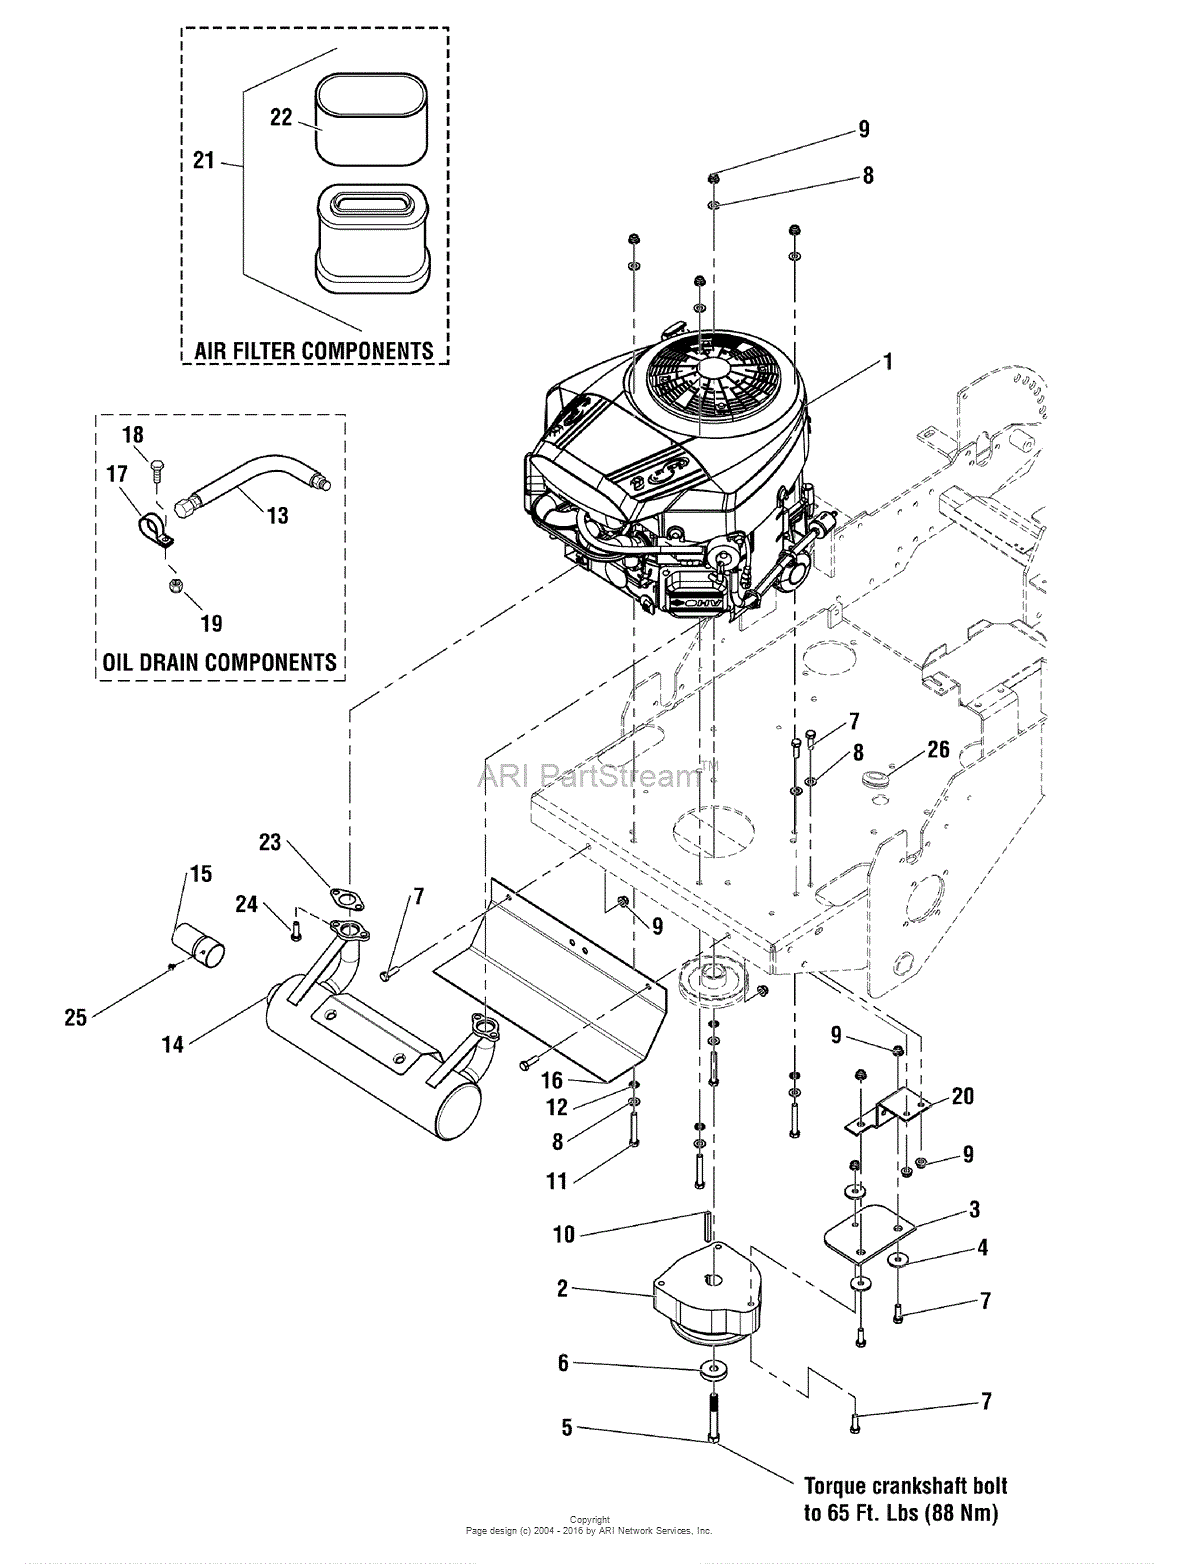 [DIAGRAM] Briggs And Stratton 24 Hp Wiring Diagram - WIRINGDIAGRAM.ONLINE